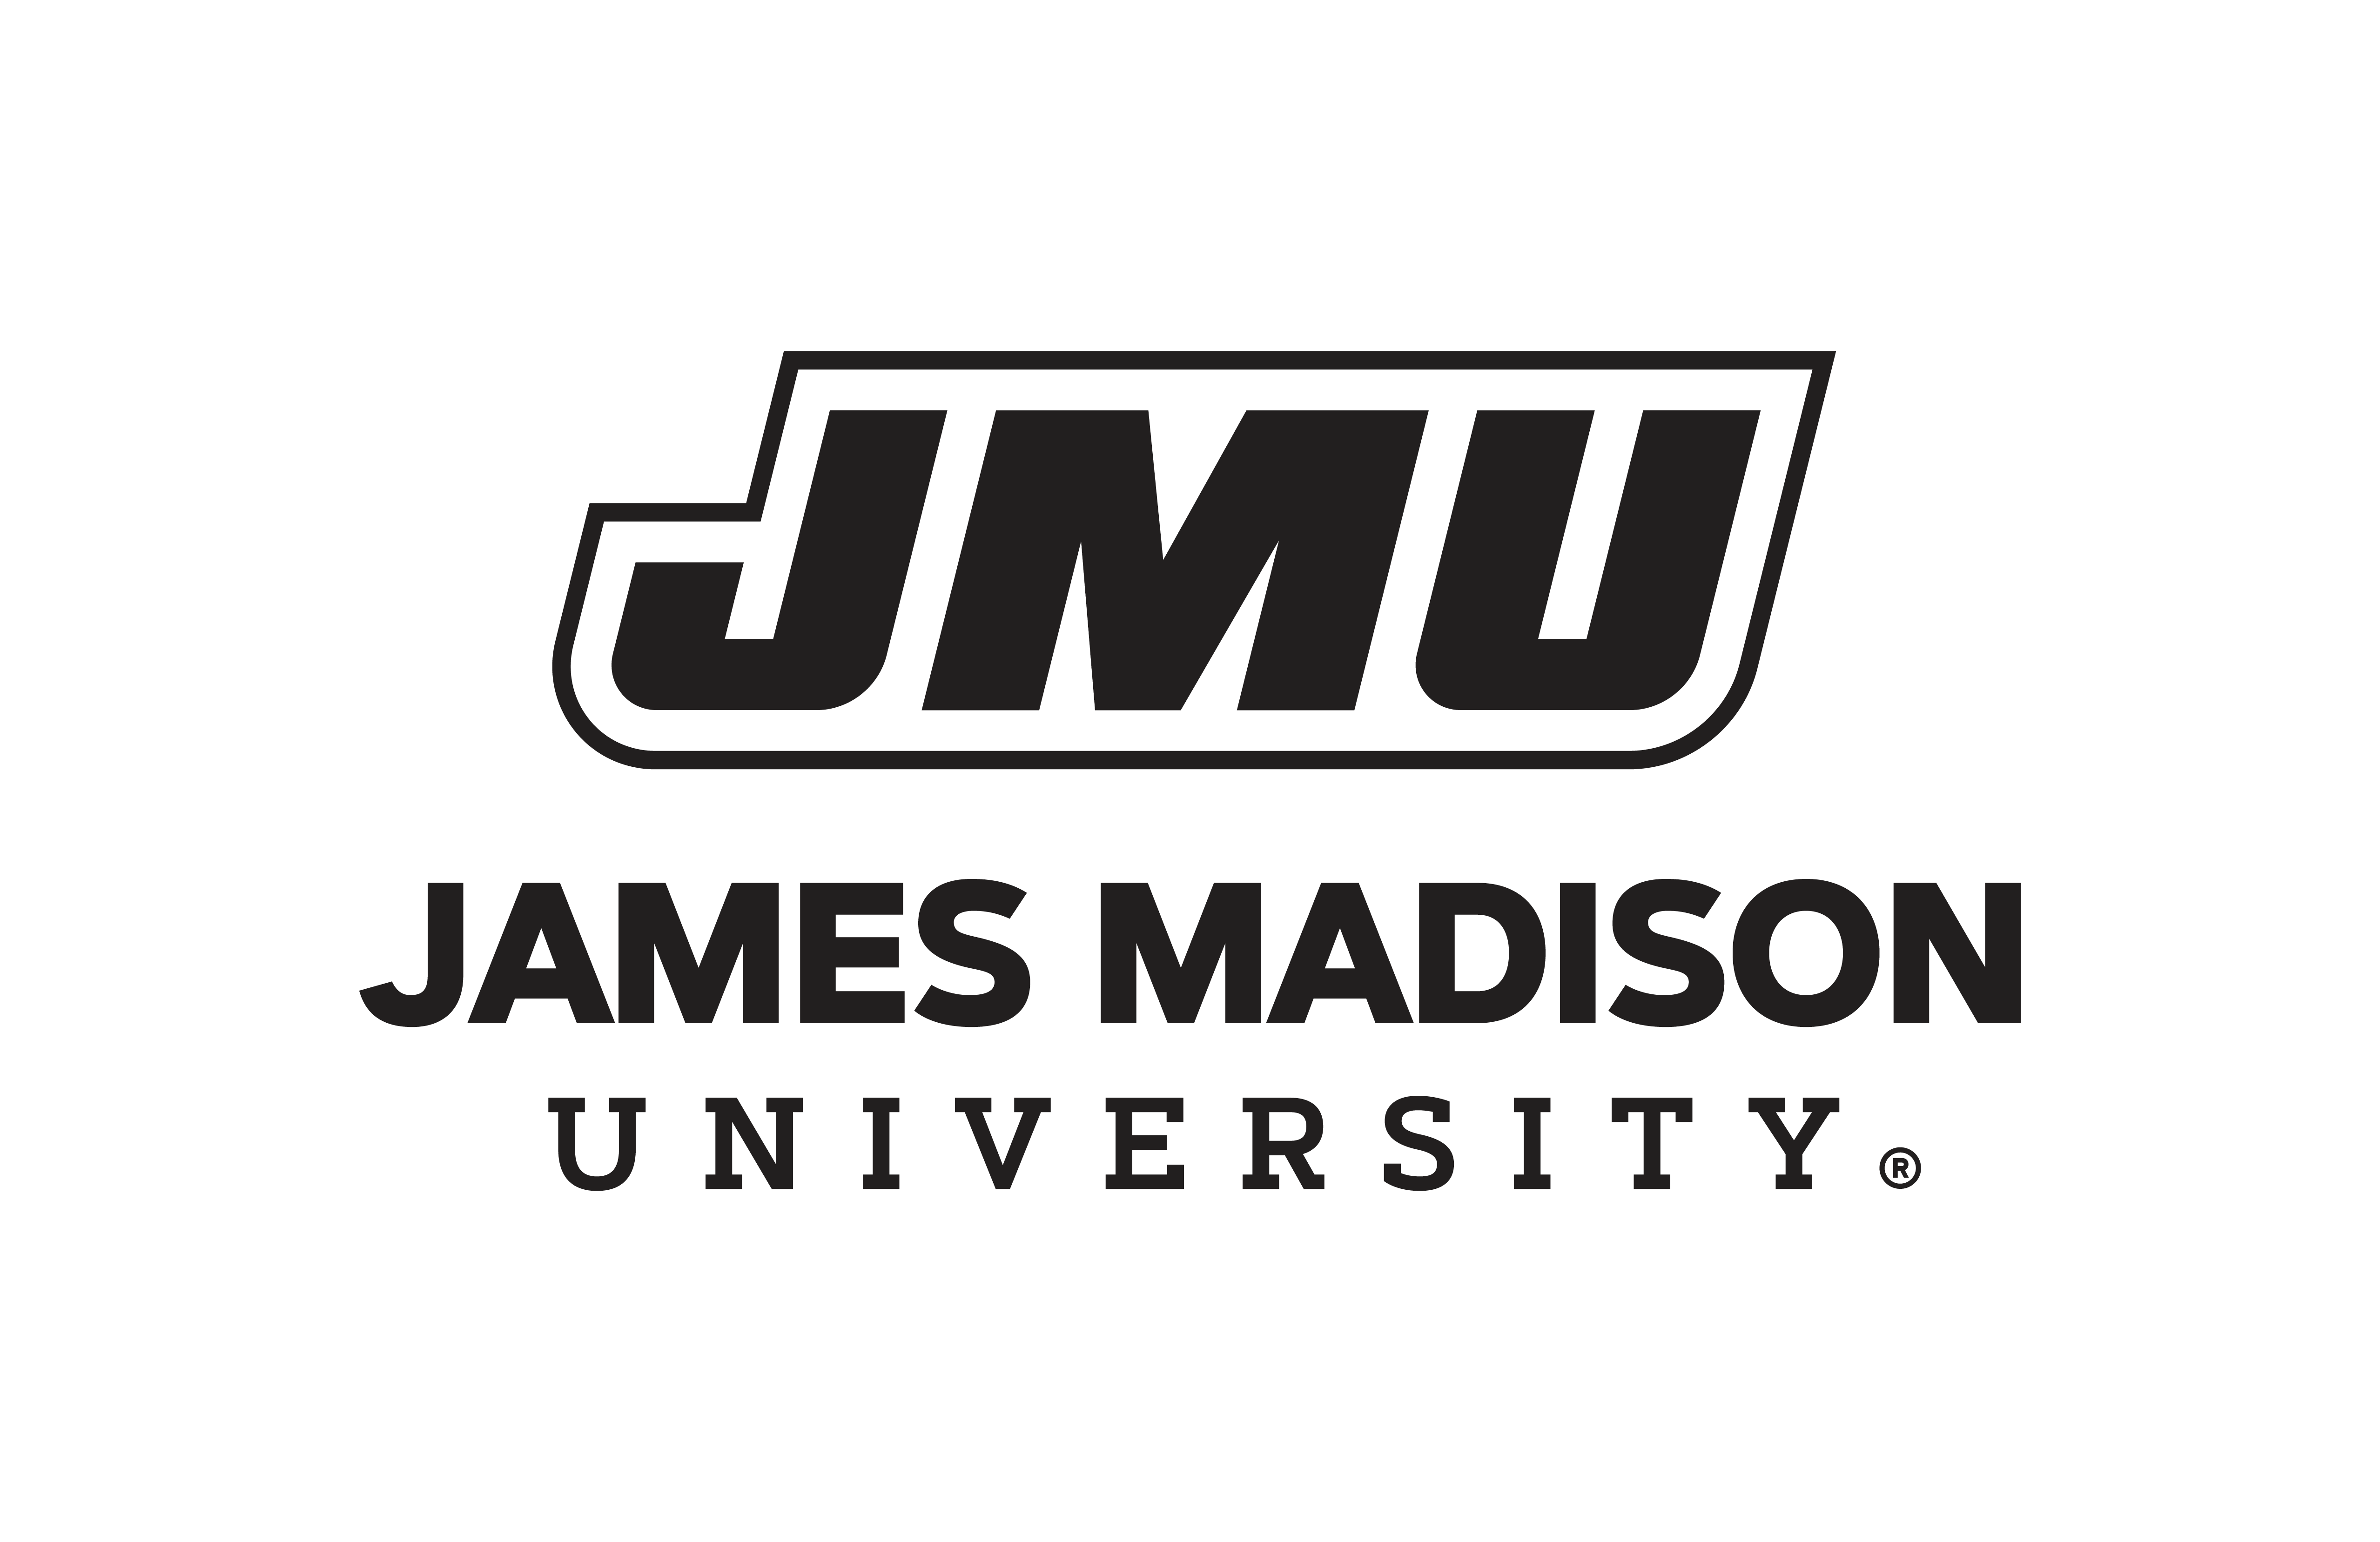 JMU Logo - James Madison University - Logo Design Standards for JMU Website